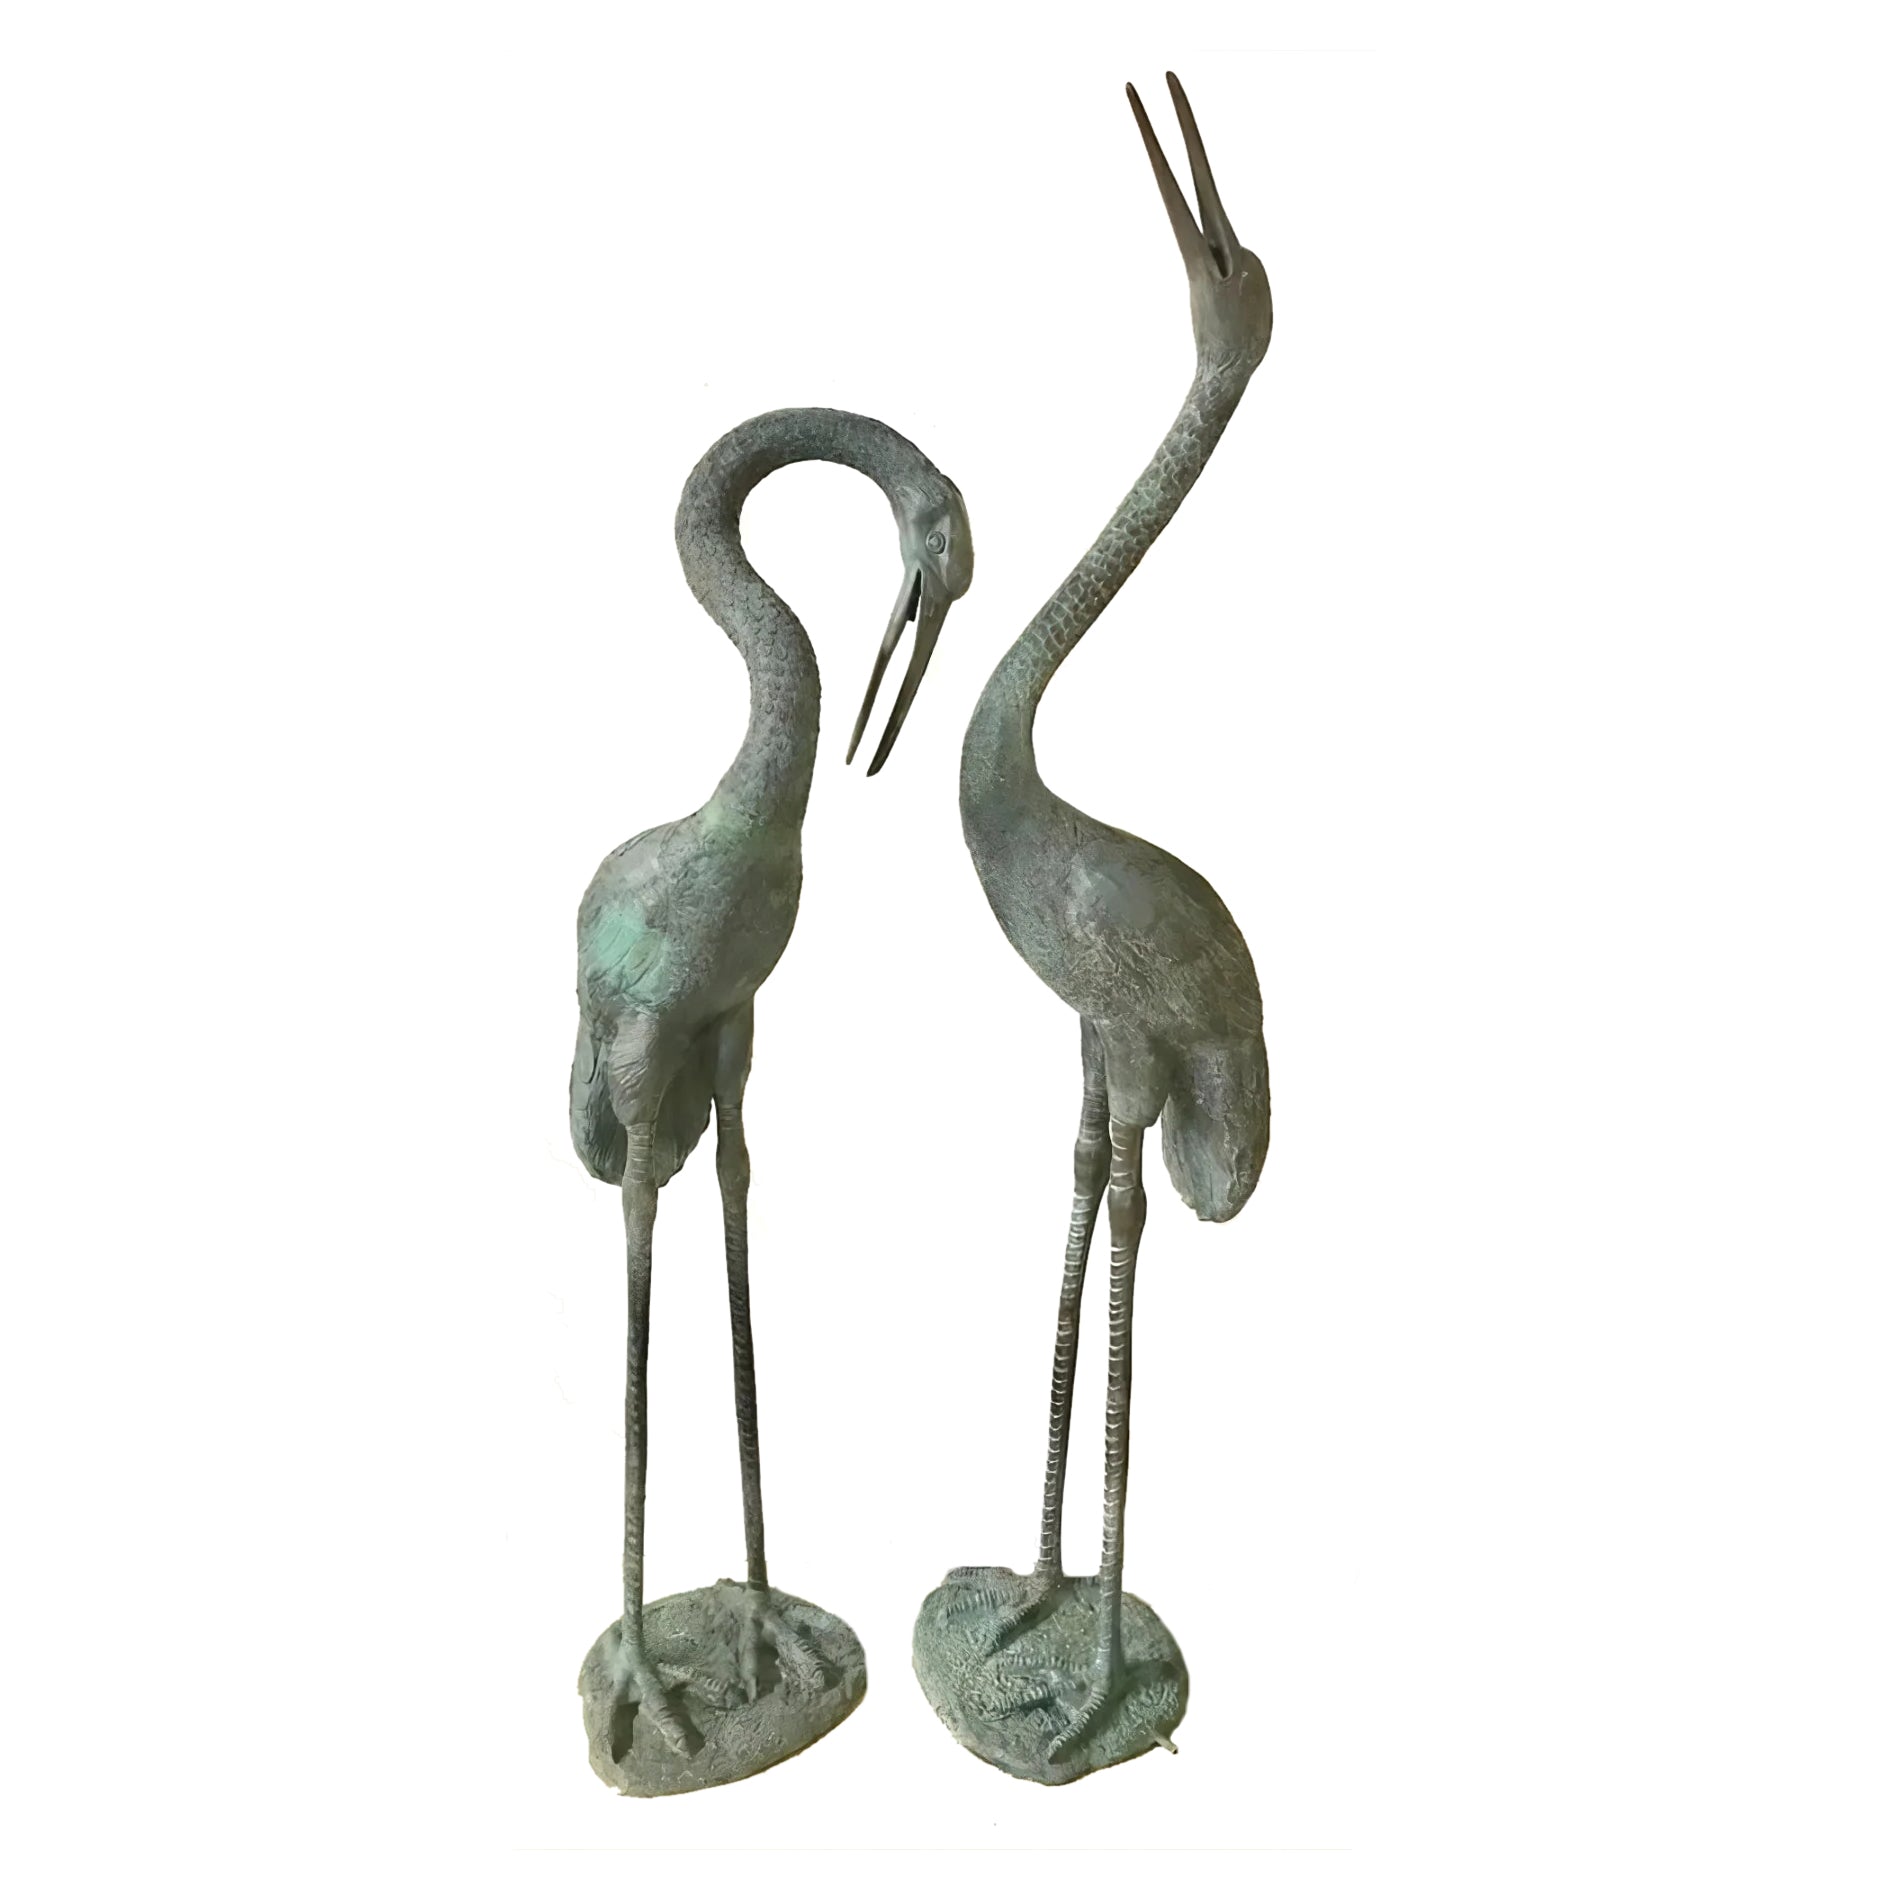 Pair of Cranes- Bronze Sculpture